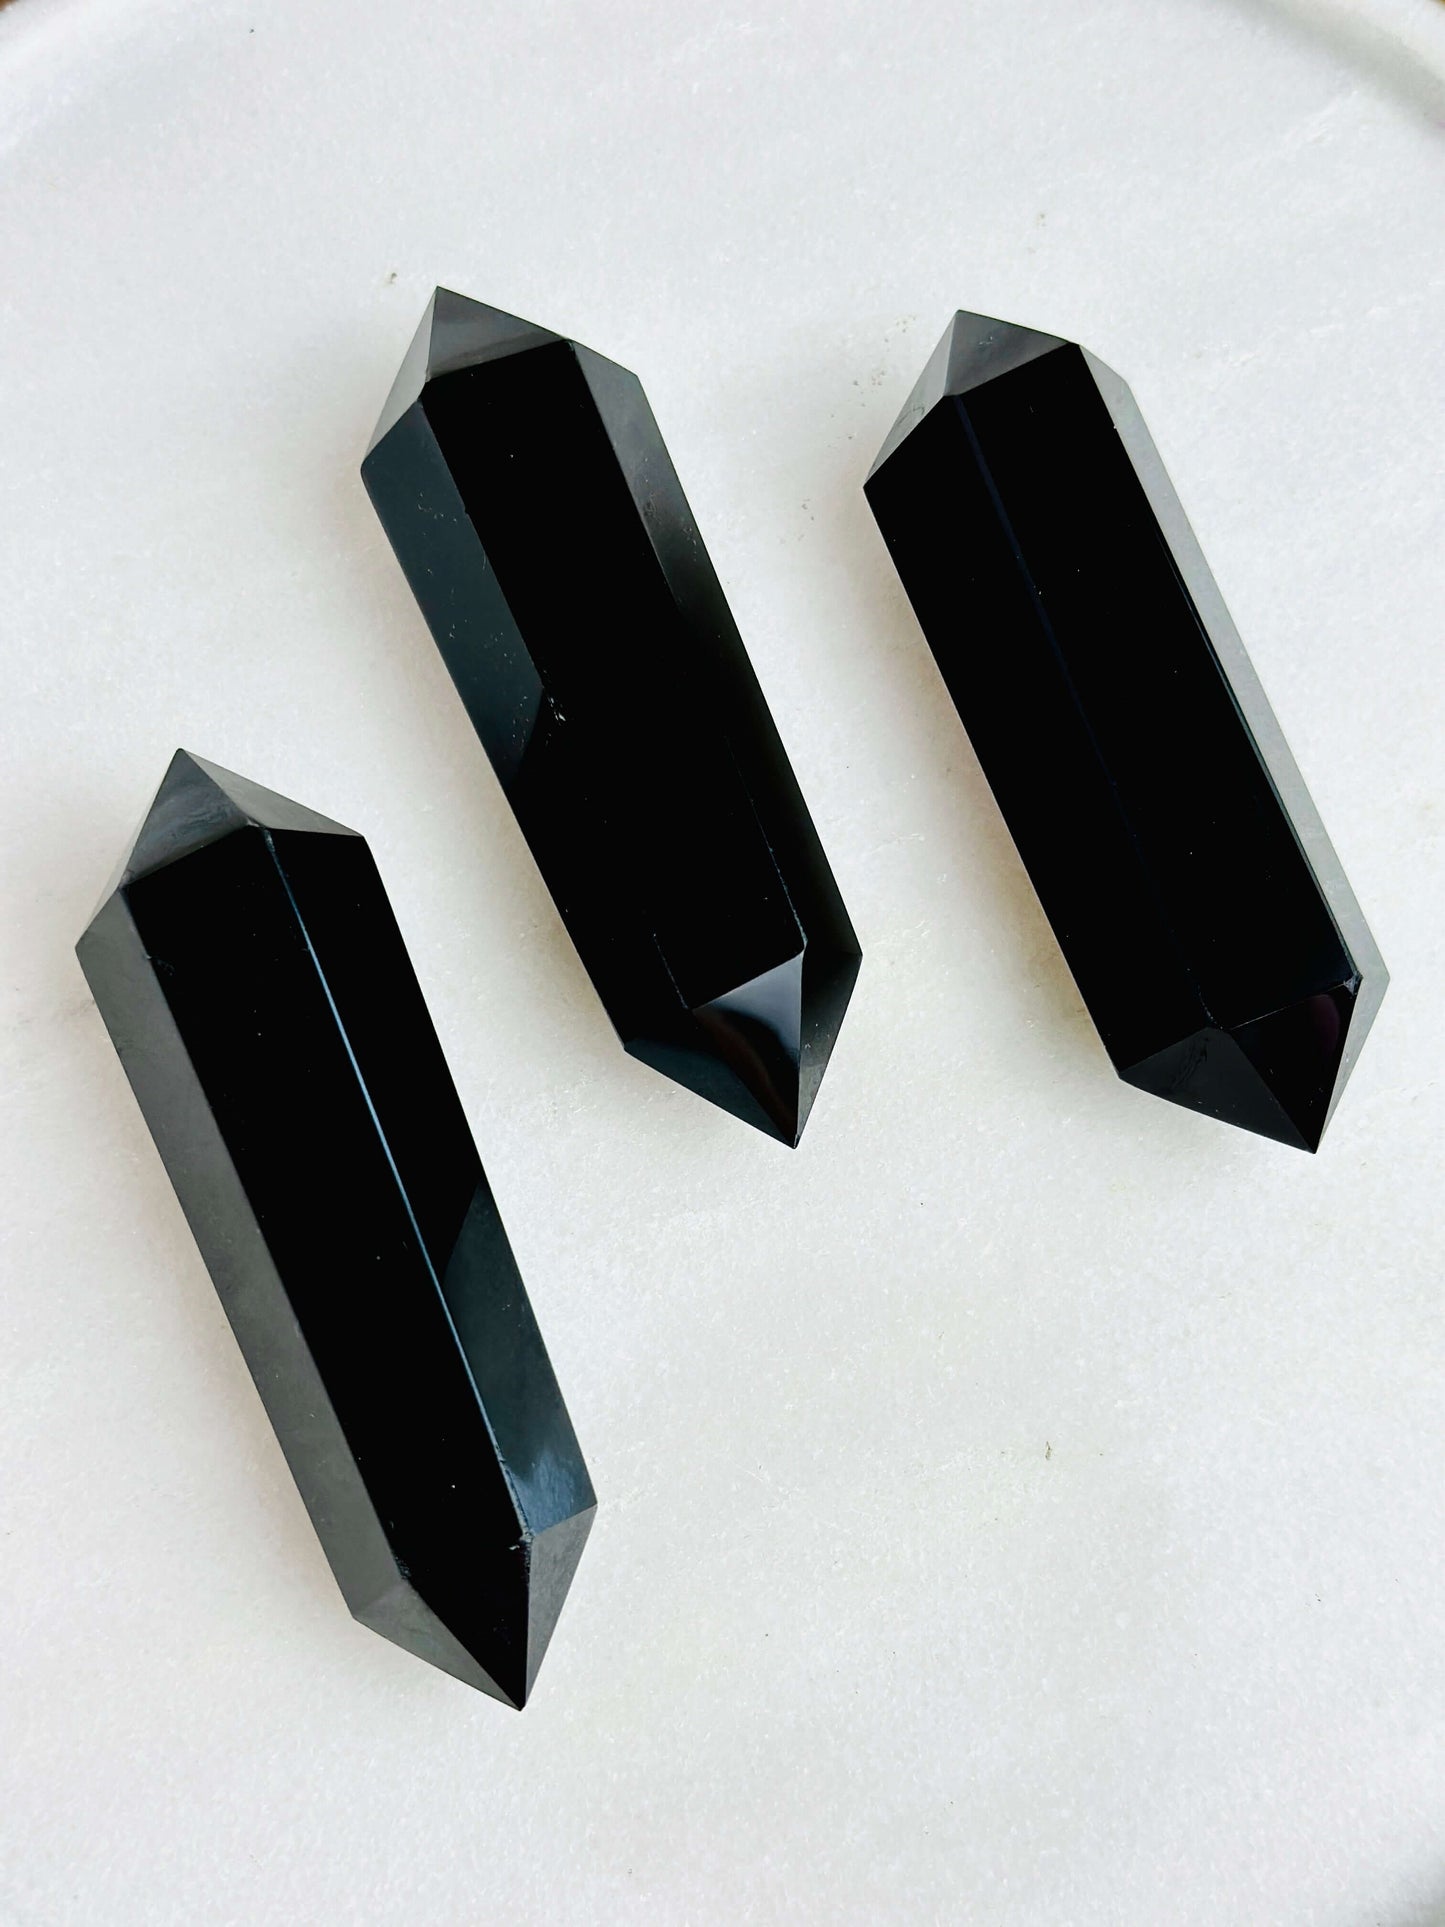 Black Obsidian crystal points